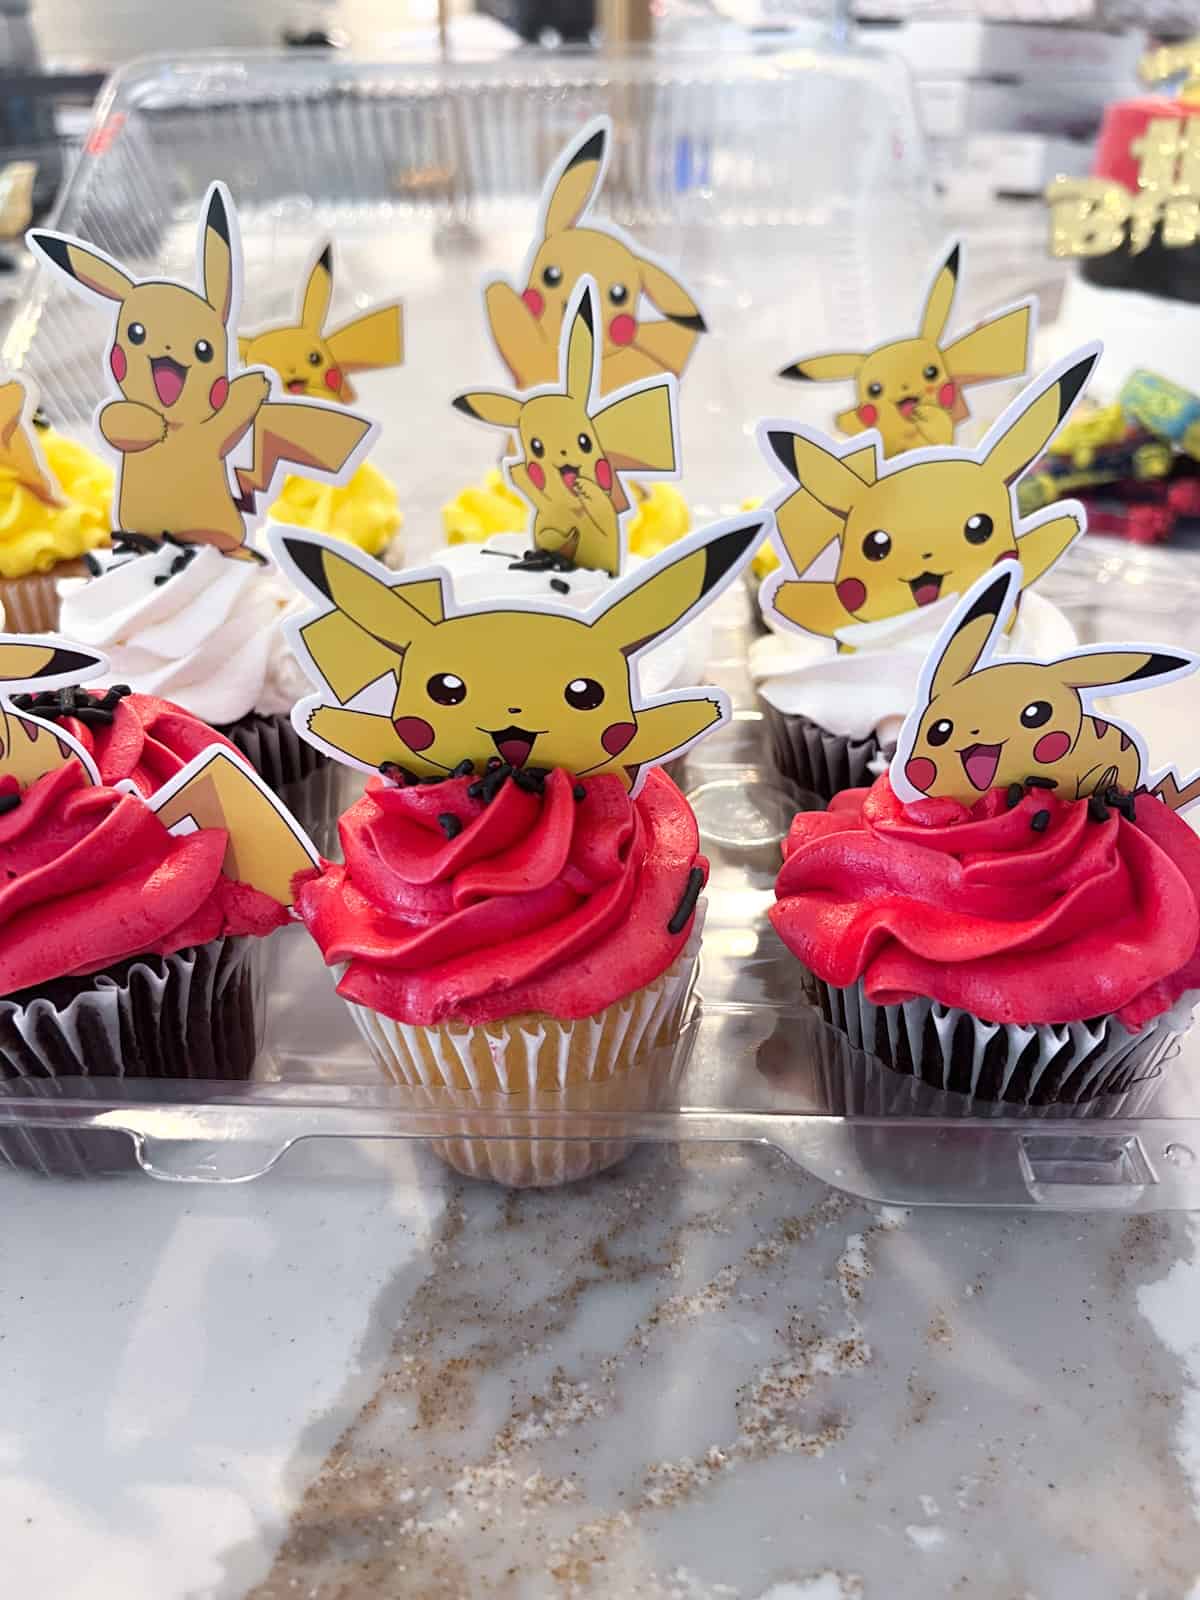 Pokemon cupcakes with pikachu on top.